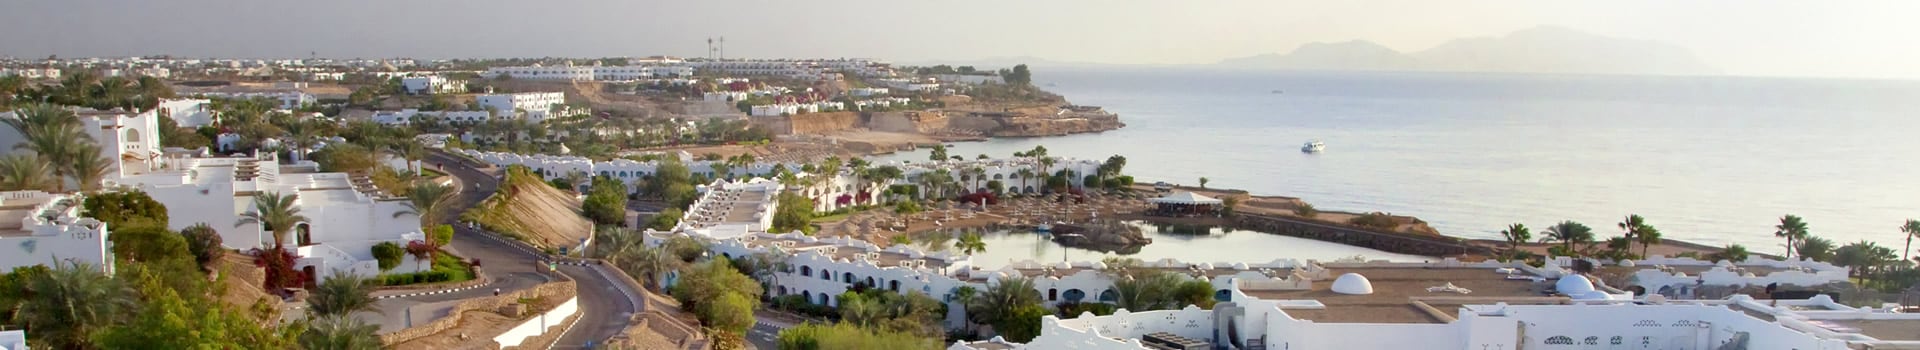 Rom - Sharm el sheikh